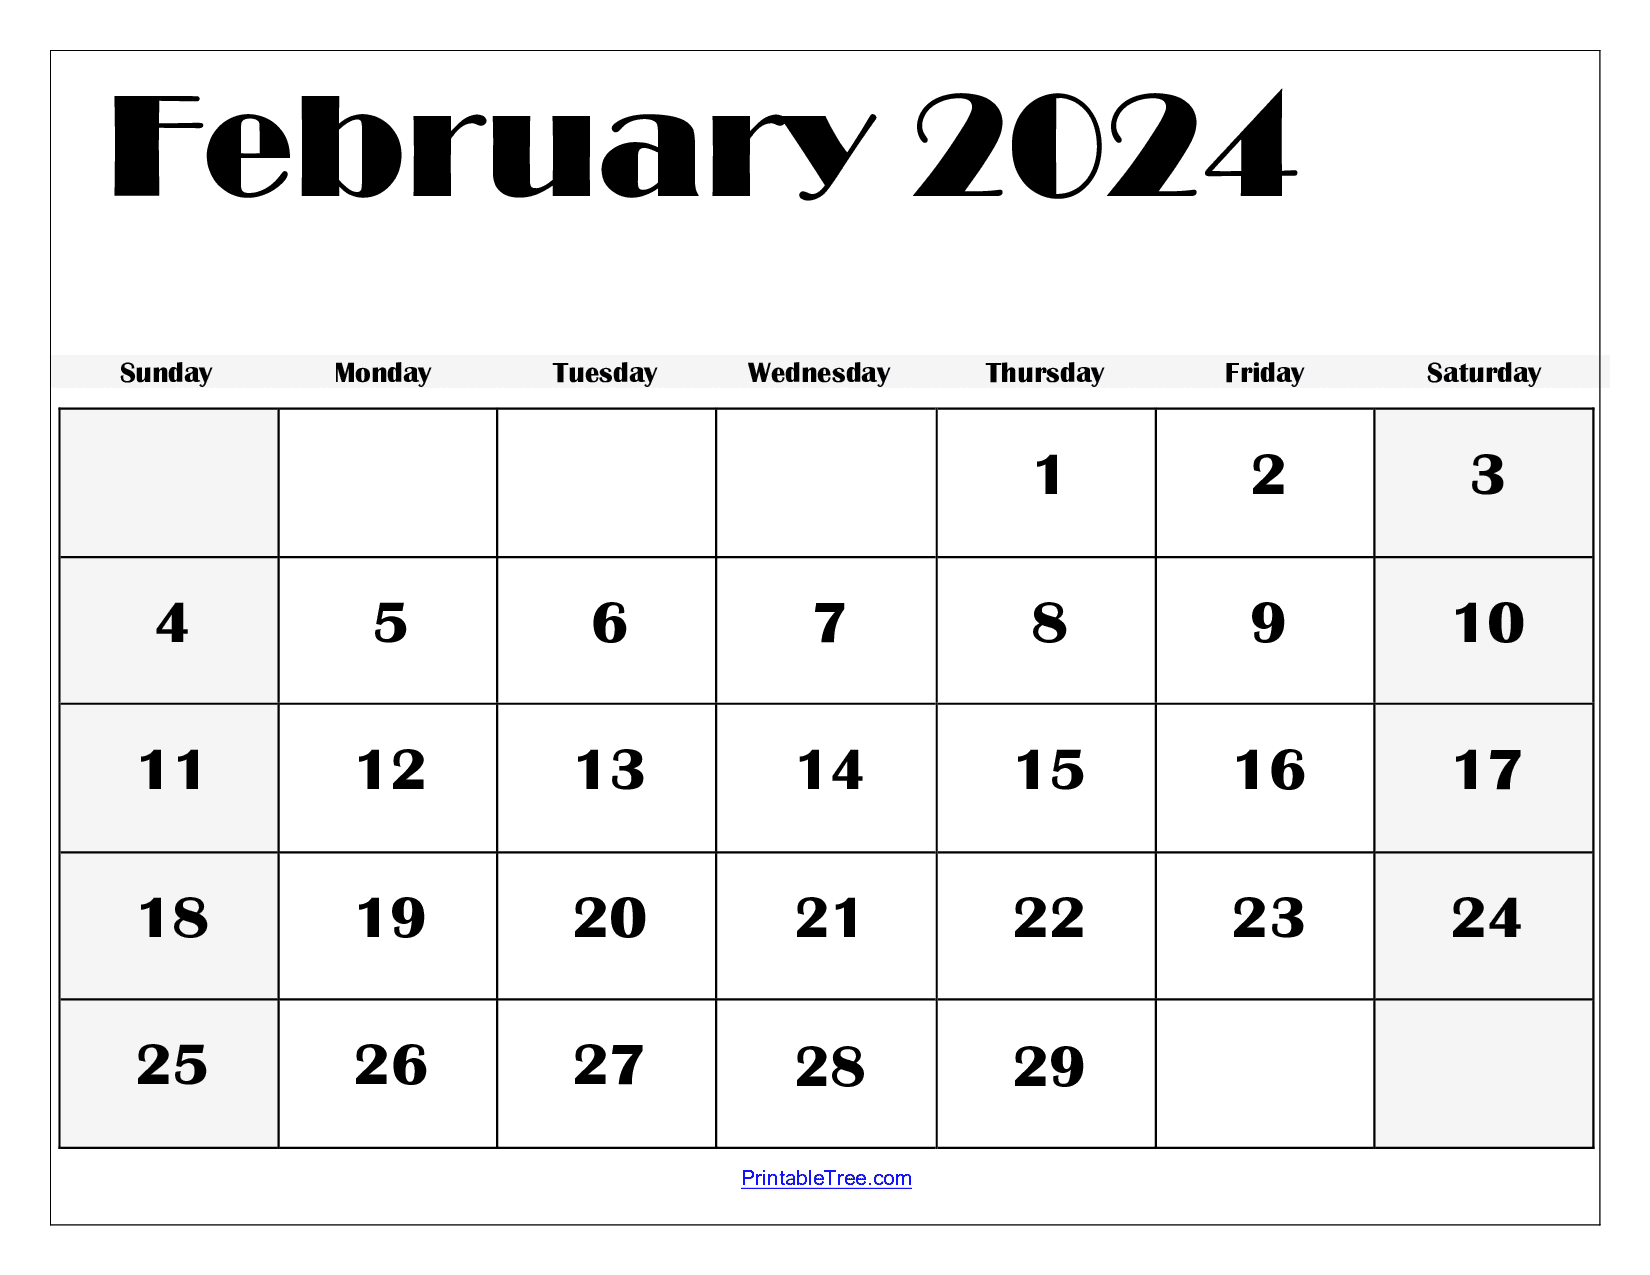 February 2024 Calendar Printable Pdf Template With Holidays for Calendar Printable February 2024